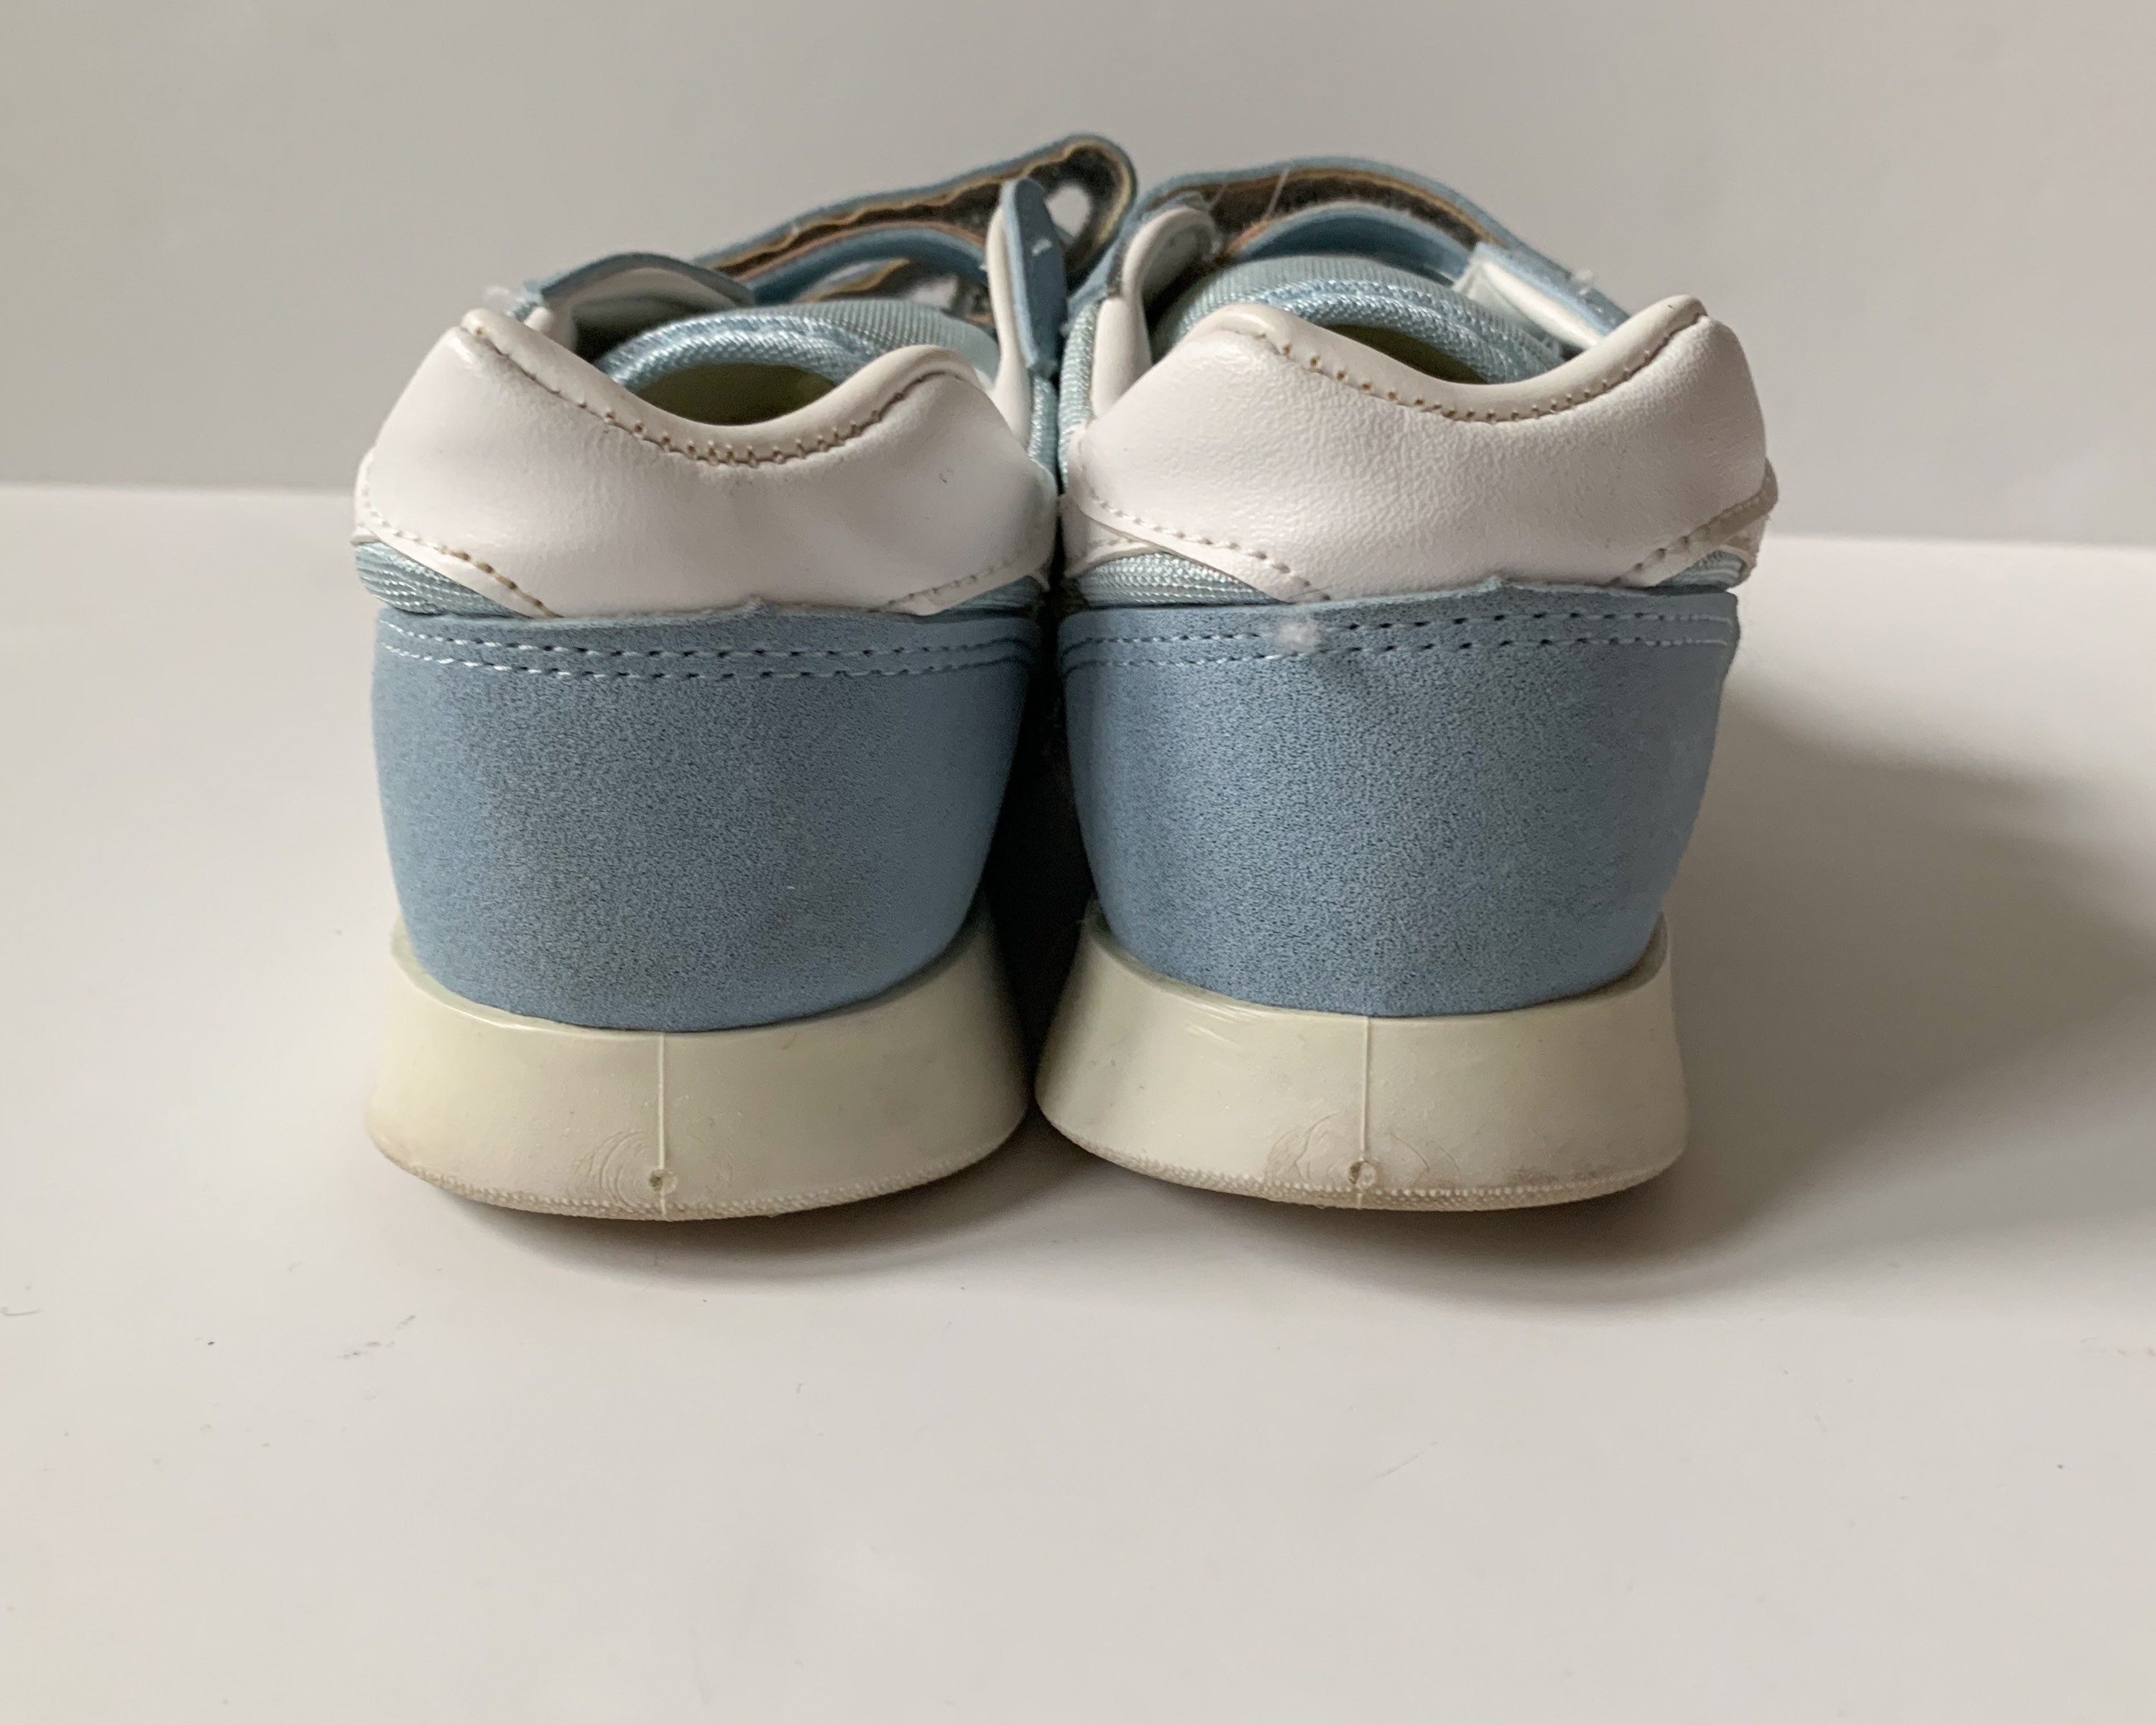 Vintage 80s sneakers / 1980s blue tennis shoes / 80s blue sneakers ...